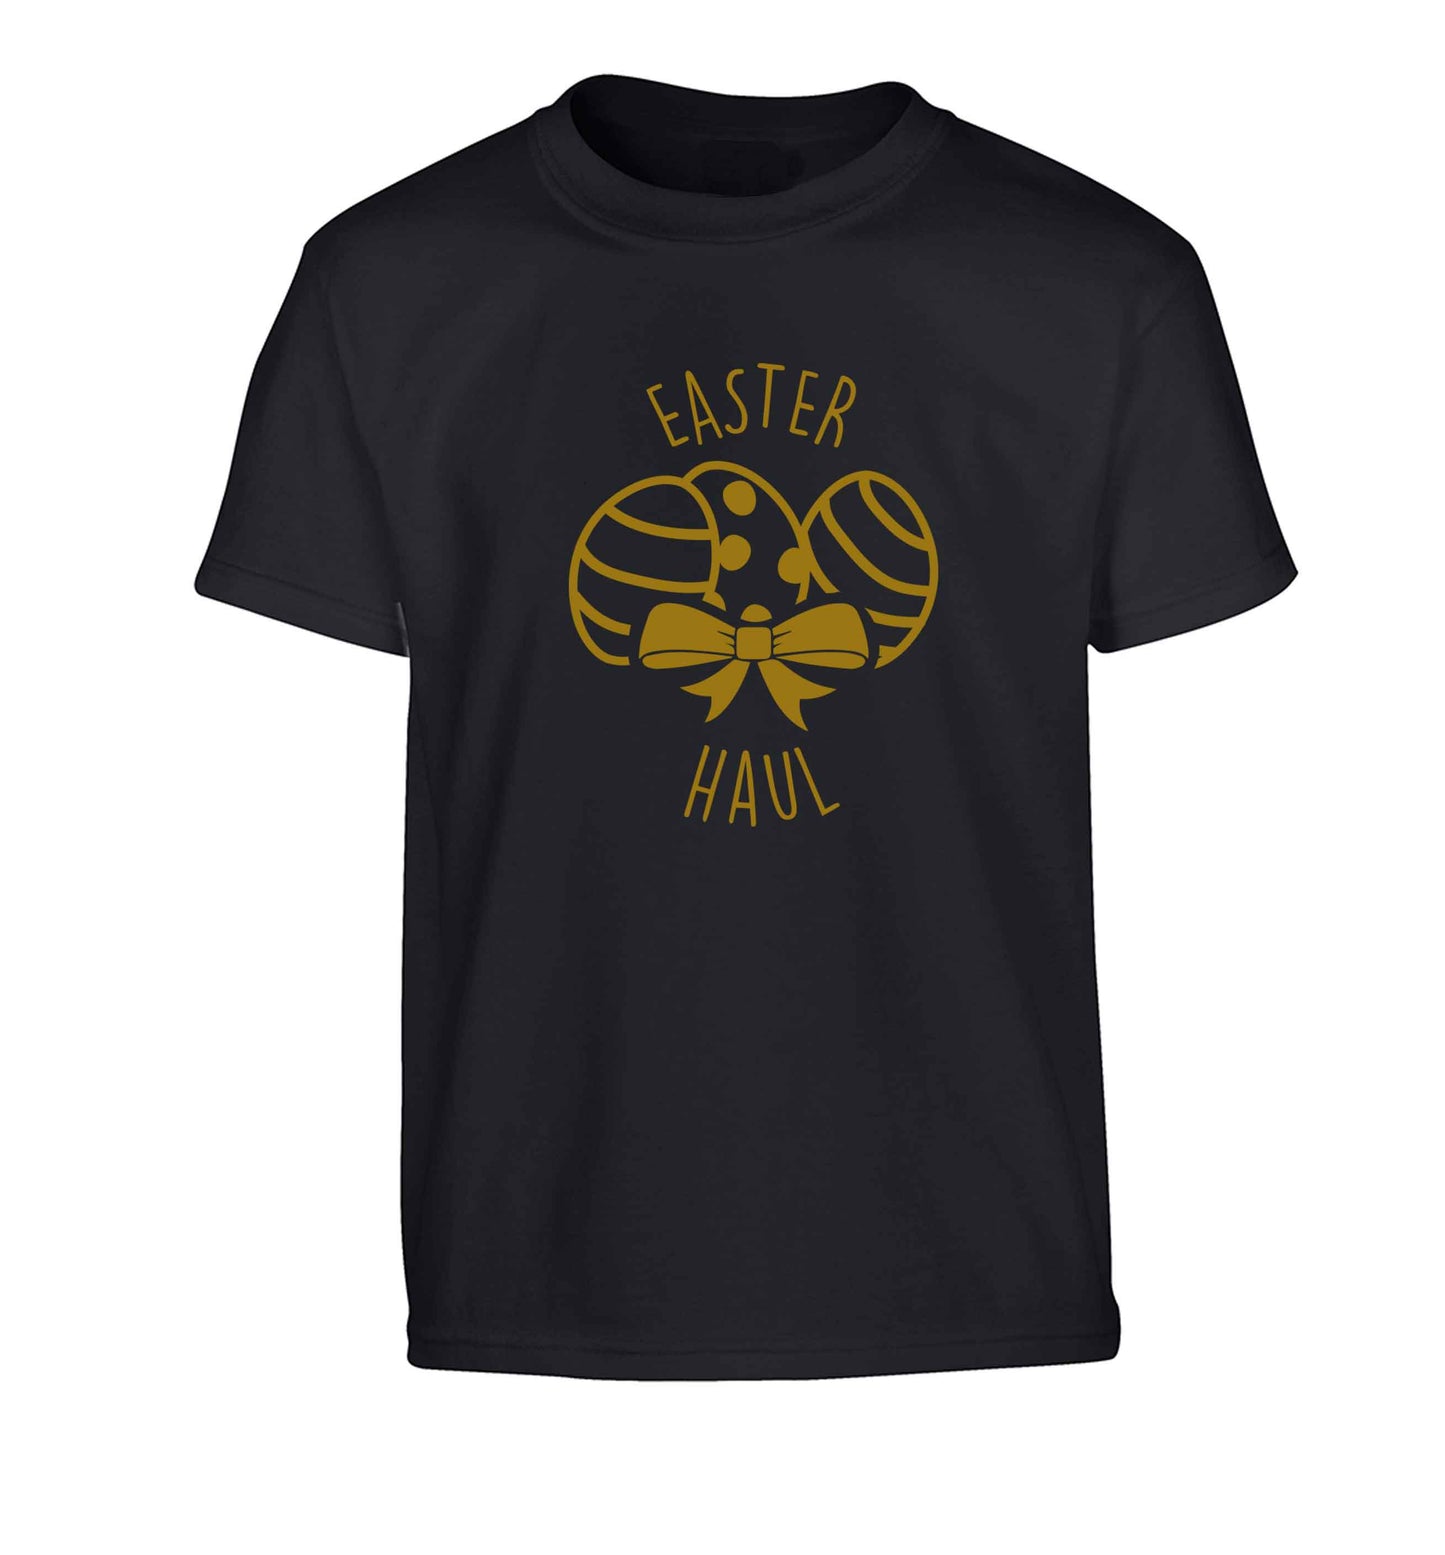 Easter haul Children's black Tshirt 12-13 Years